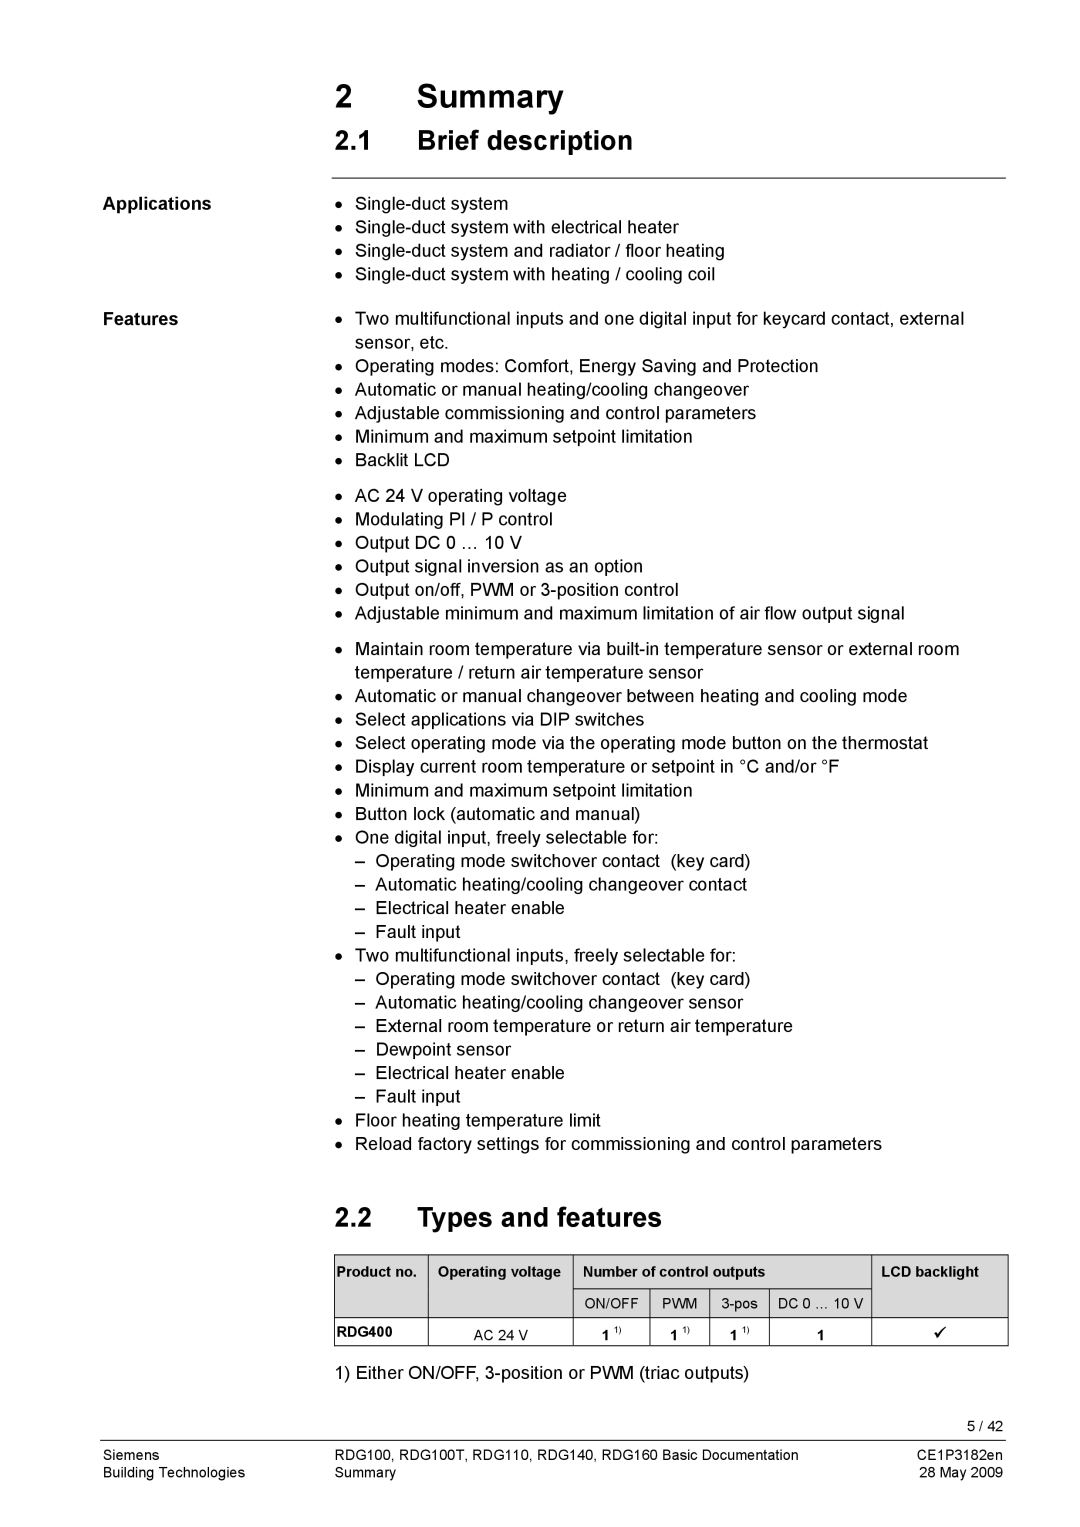 Siemens RDG400 manual Summary, Brief description, 2.2Types and features 